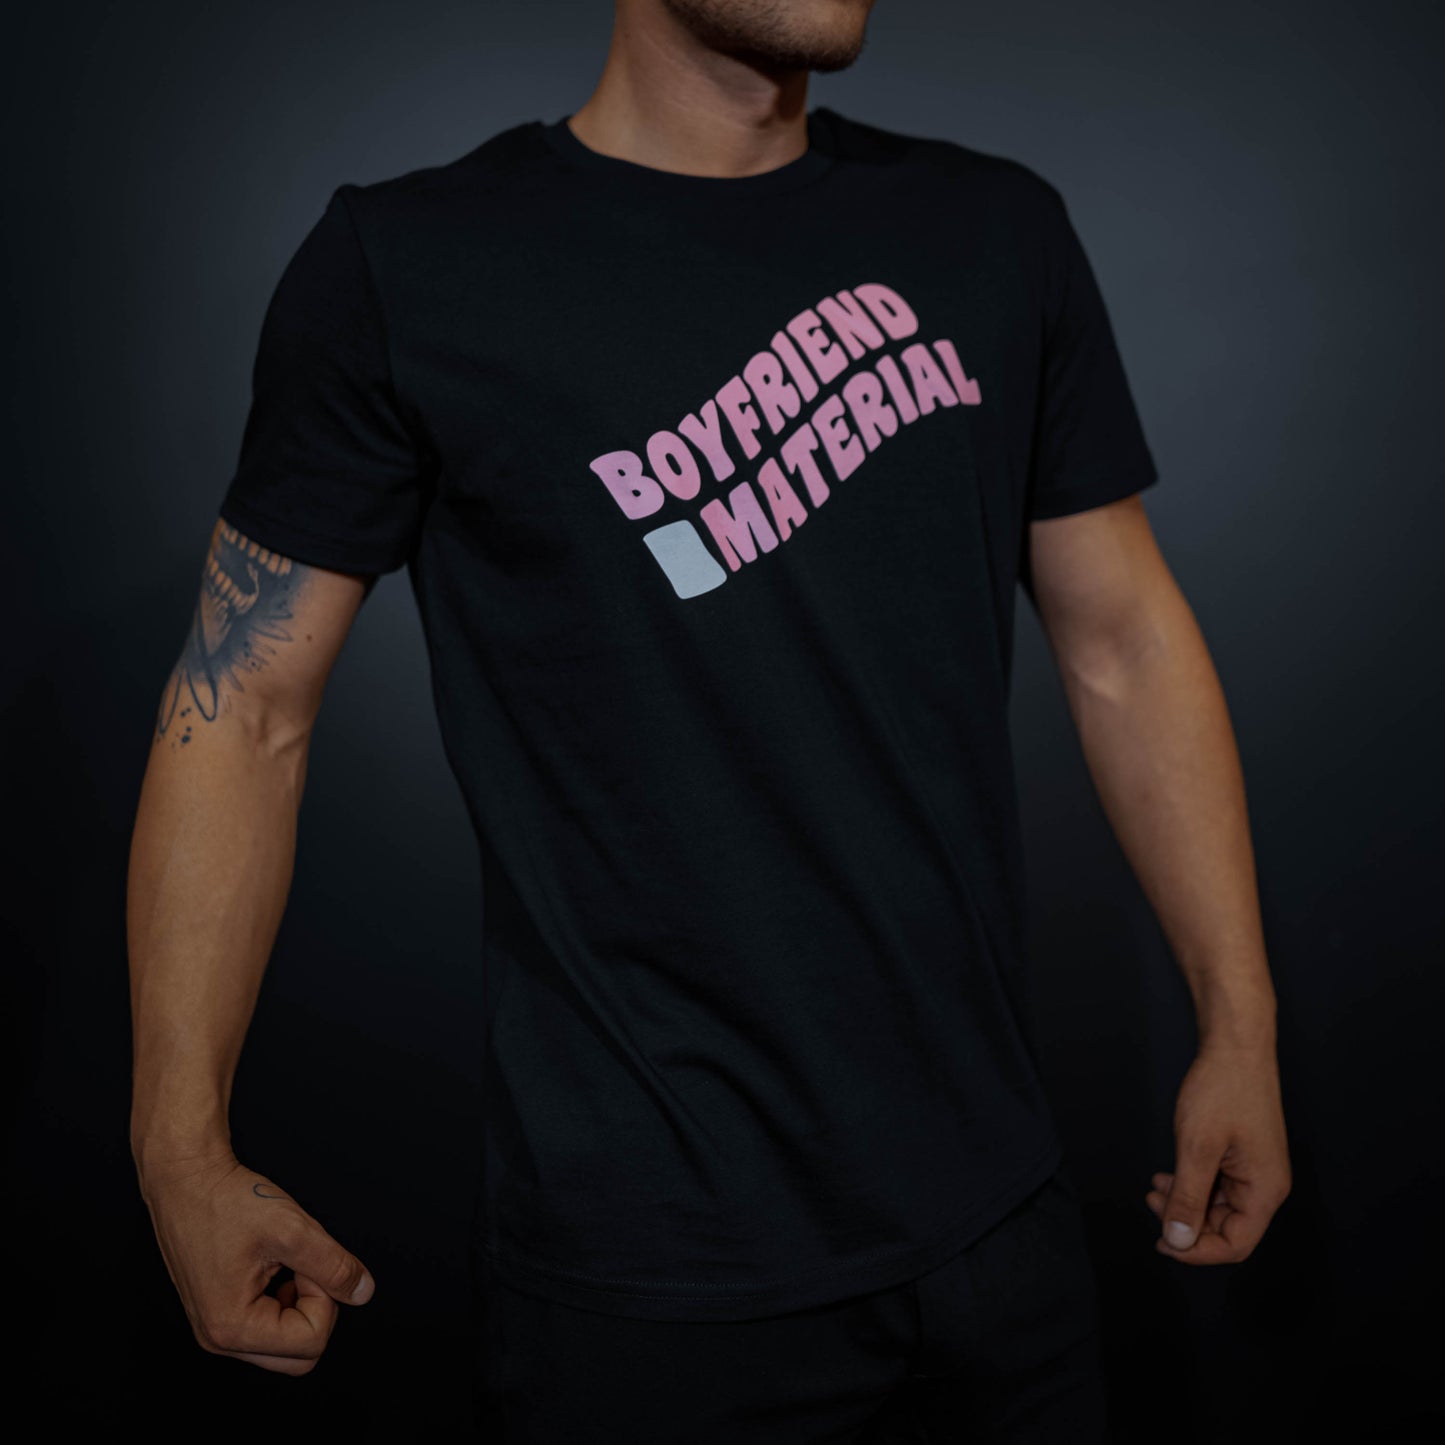 T-Shirt Boyfriend material